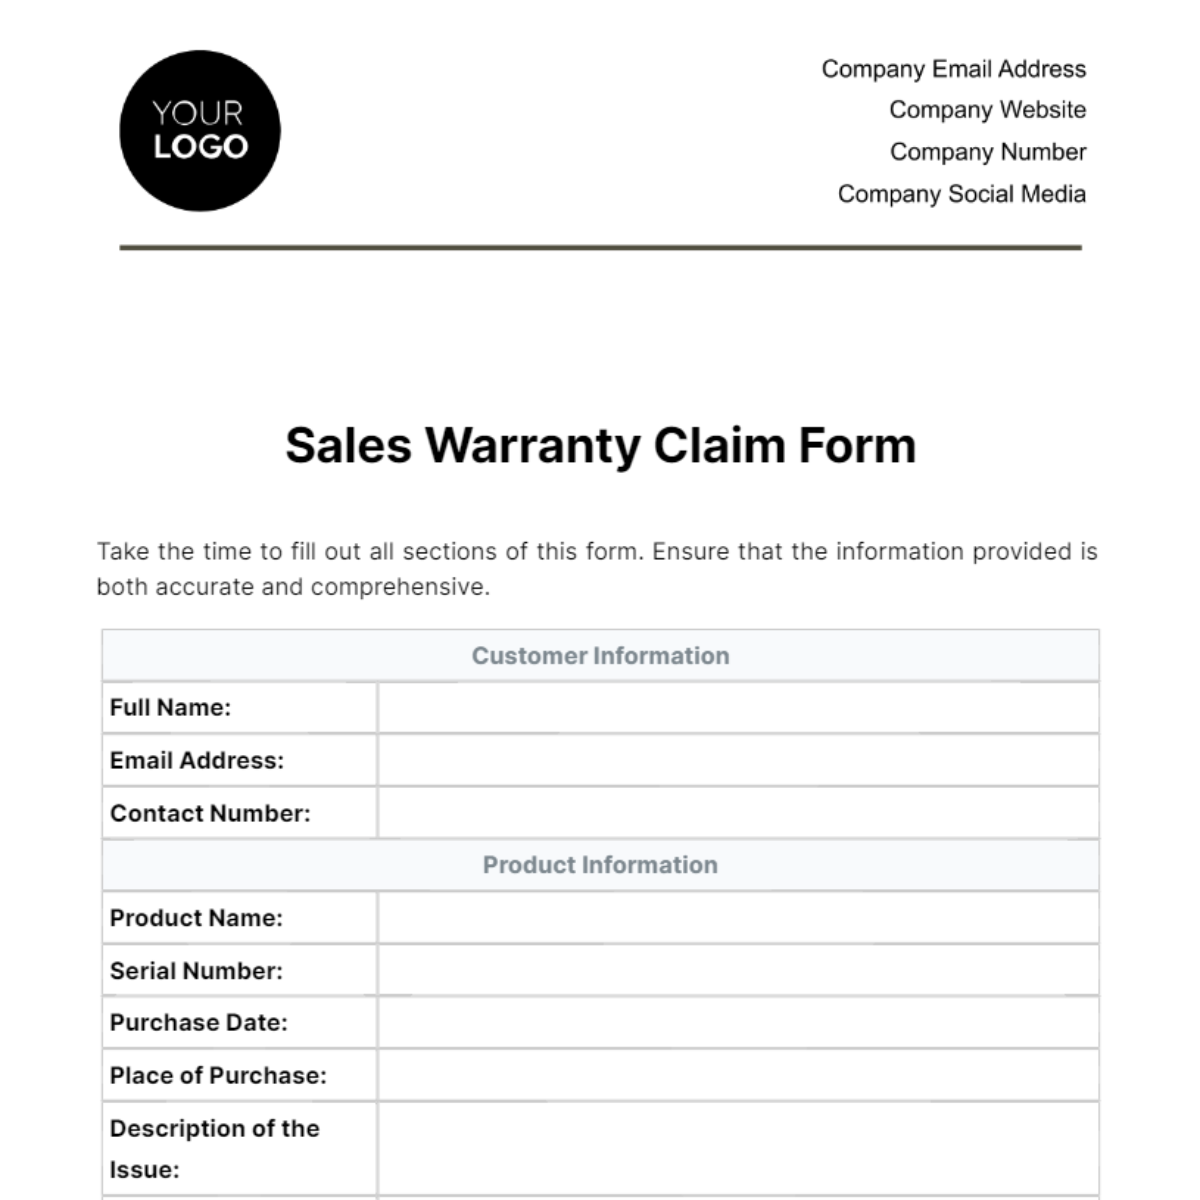 Sales Warranty Claim Form Template